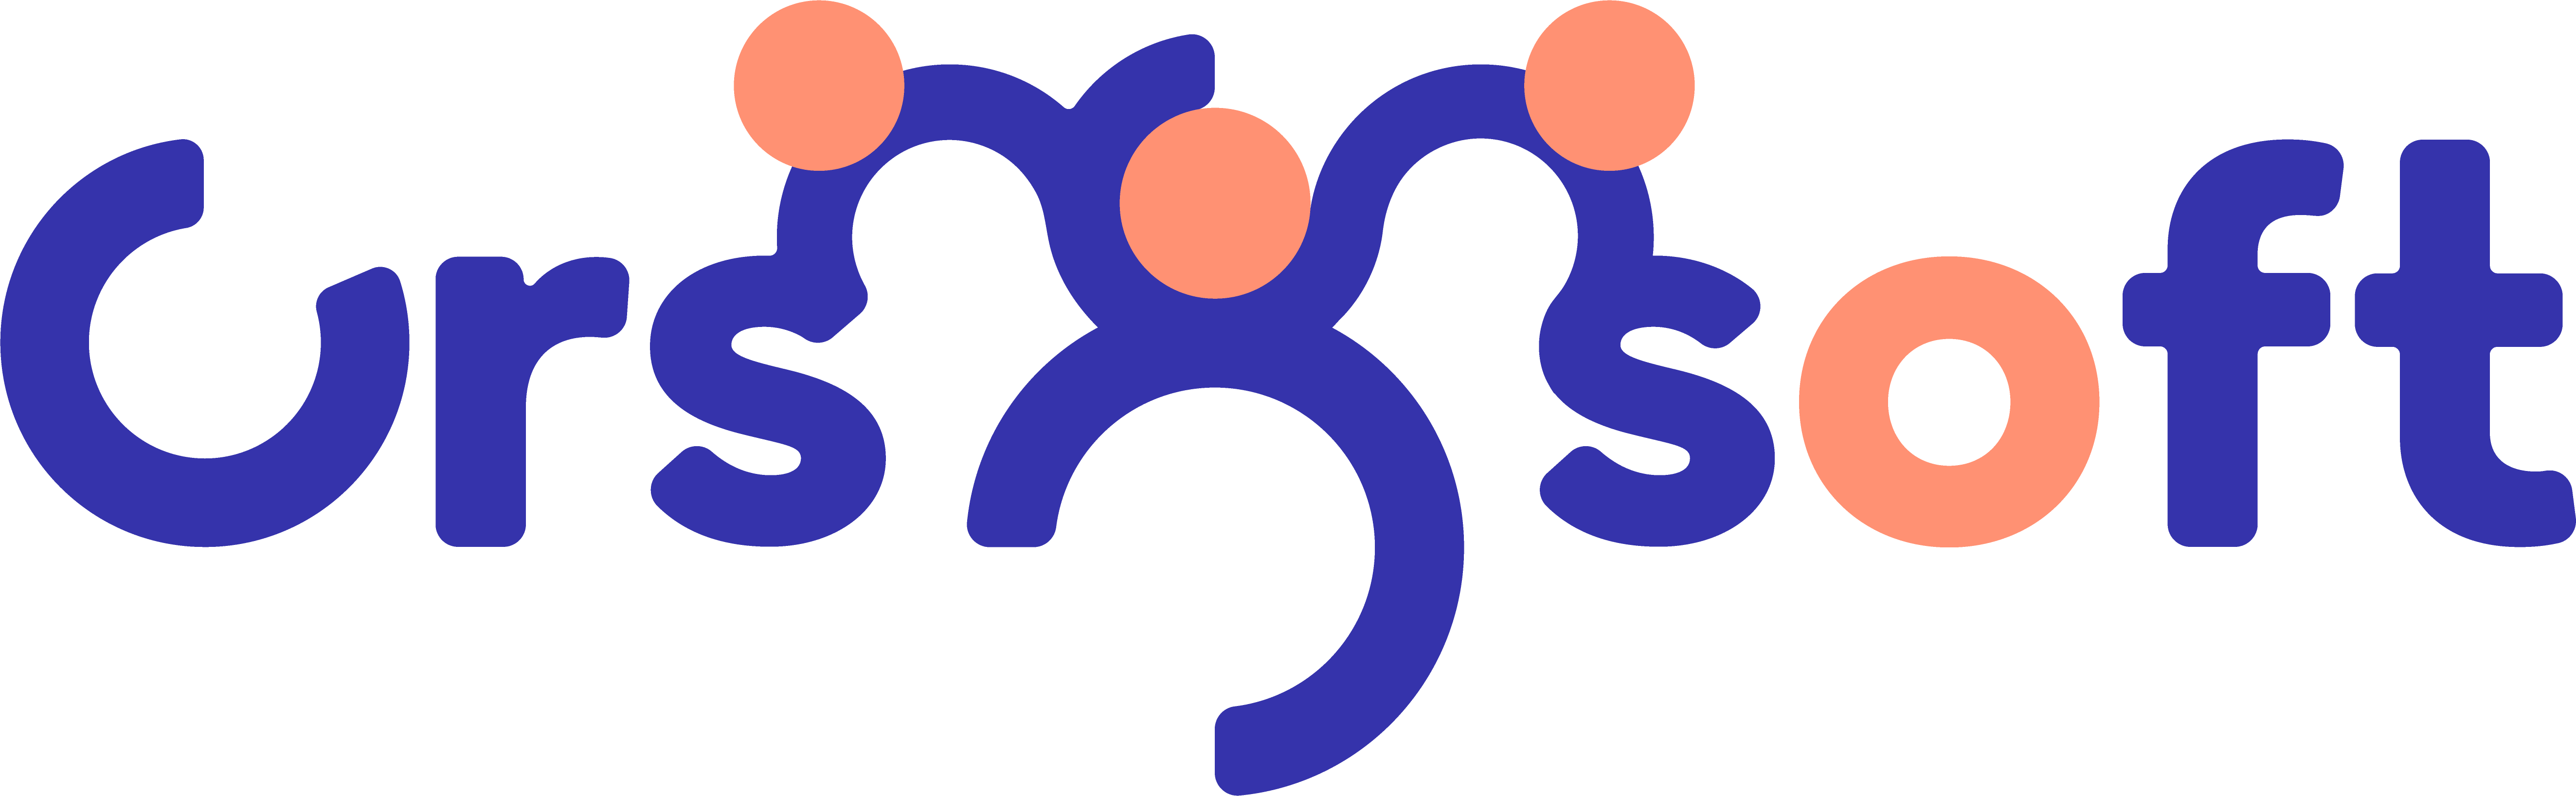 Crs Soft Logo